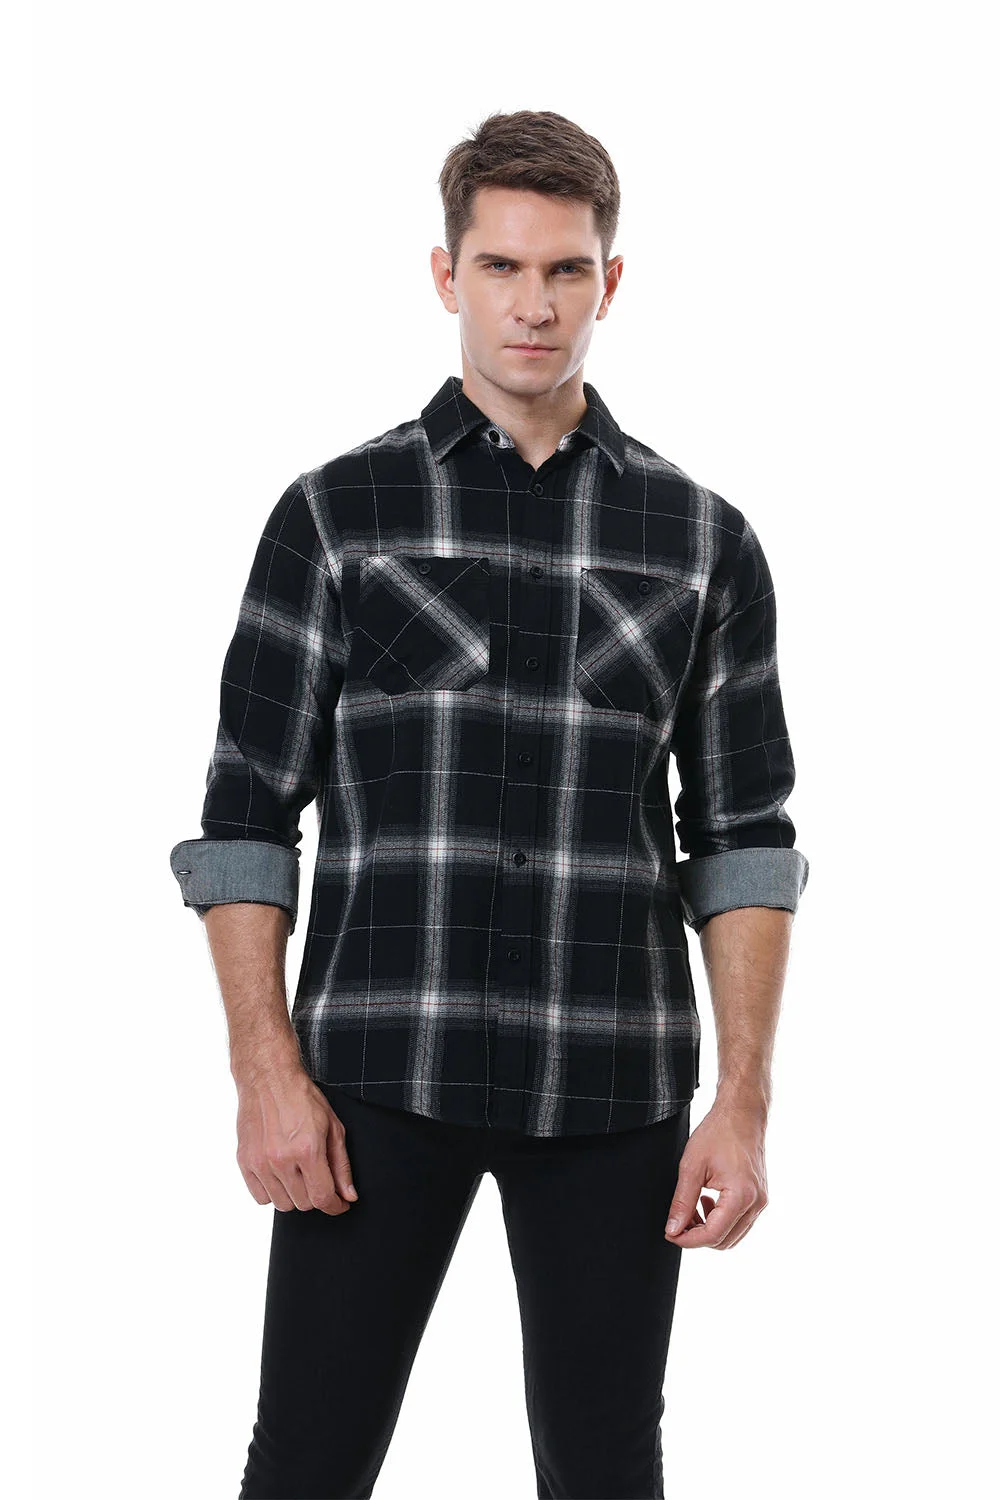 Men's Plaid Flannel Shirt Black/White Alex Vando Fashion